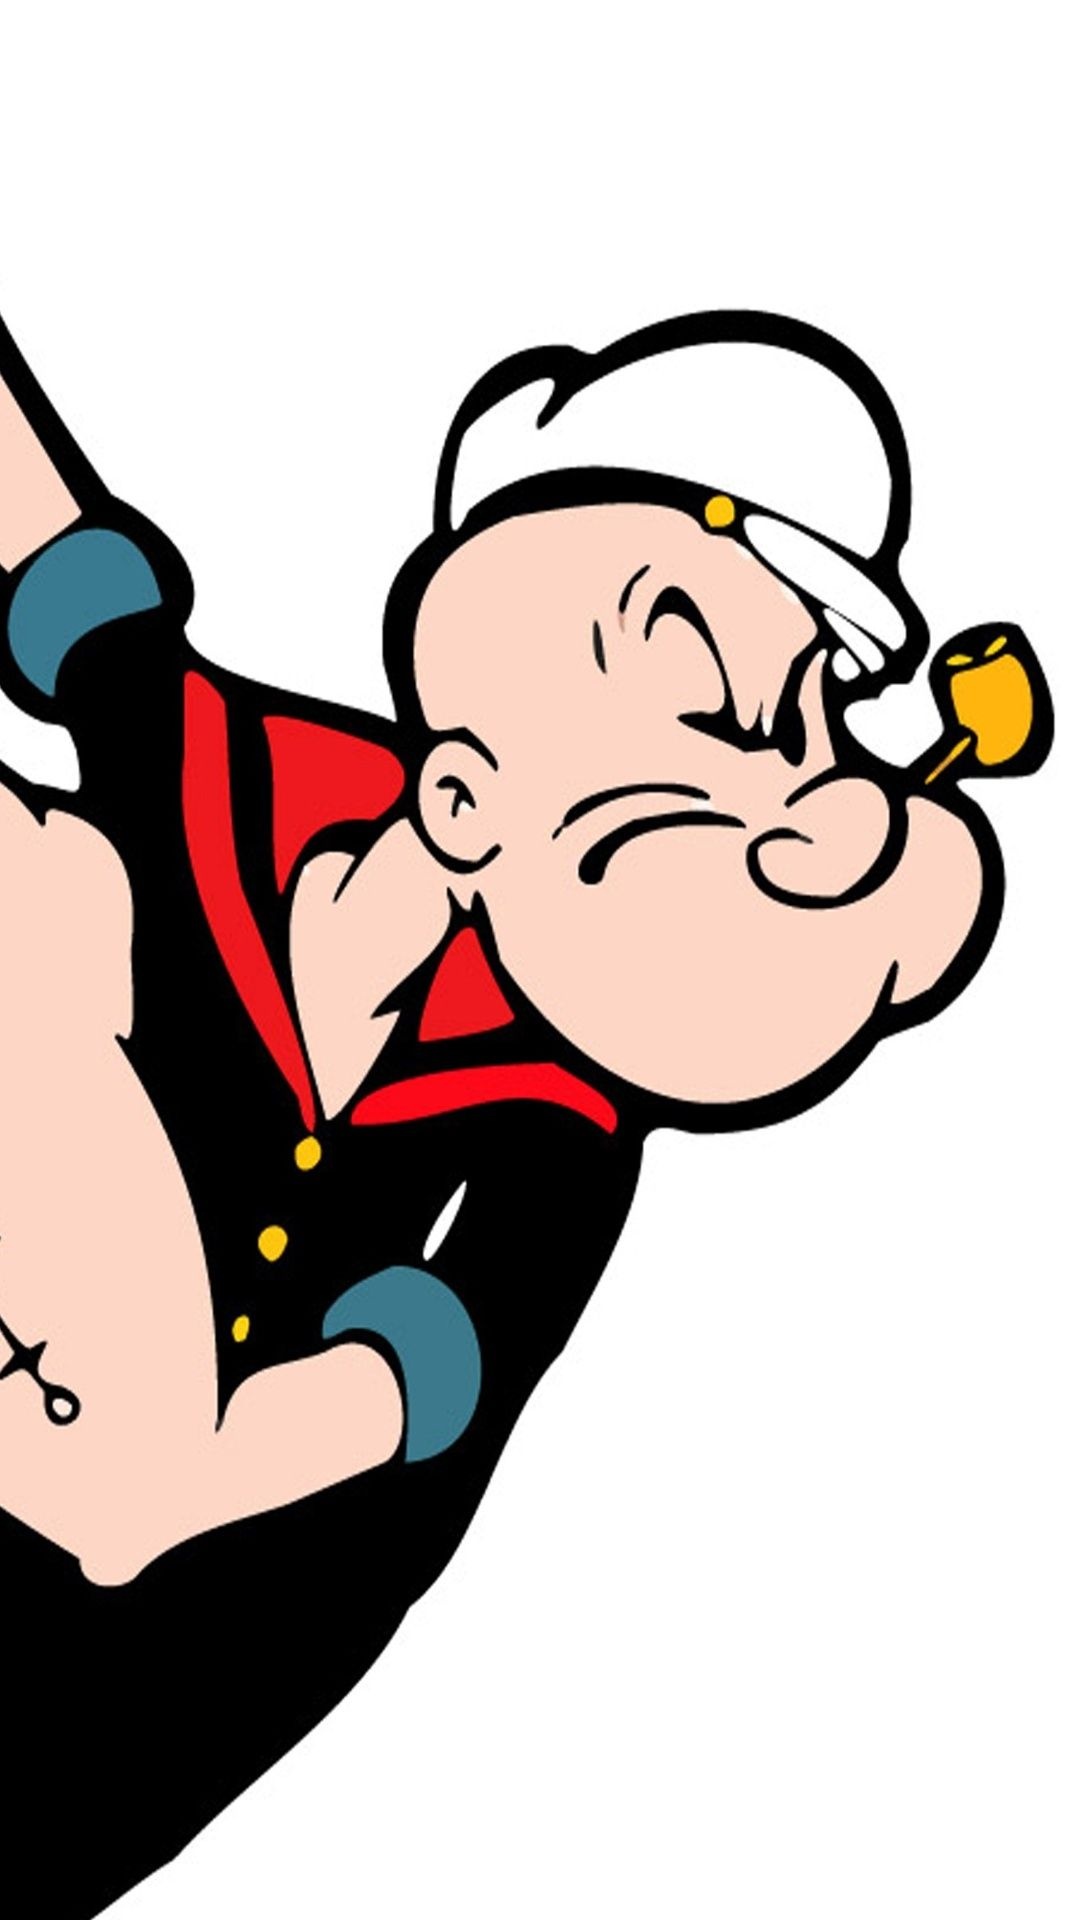 Popeye the Sailor Animation, Popeye, Cute cartoon wallpapers, Fondos de dibujos animados, 1080x1920 Full HD Phone